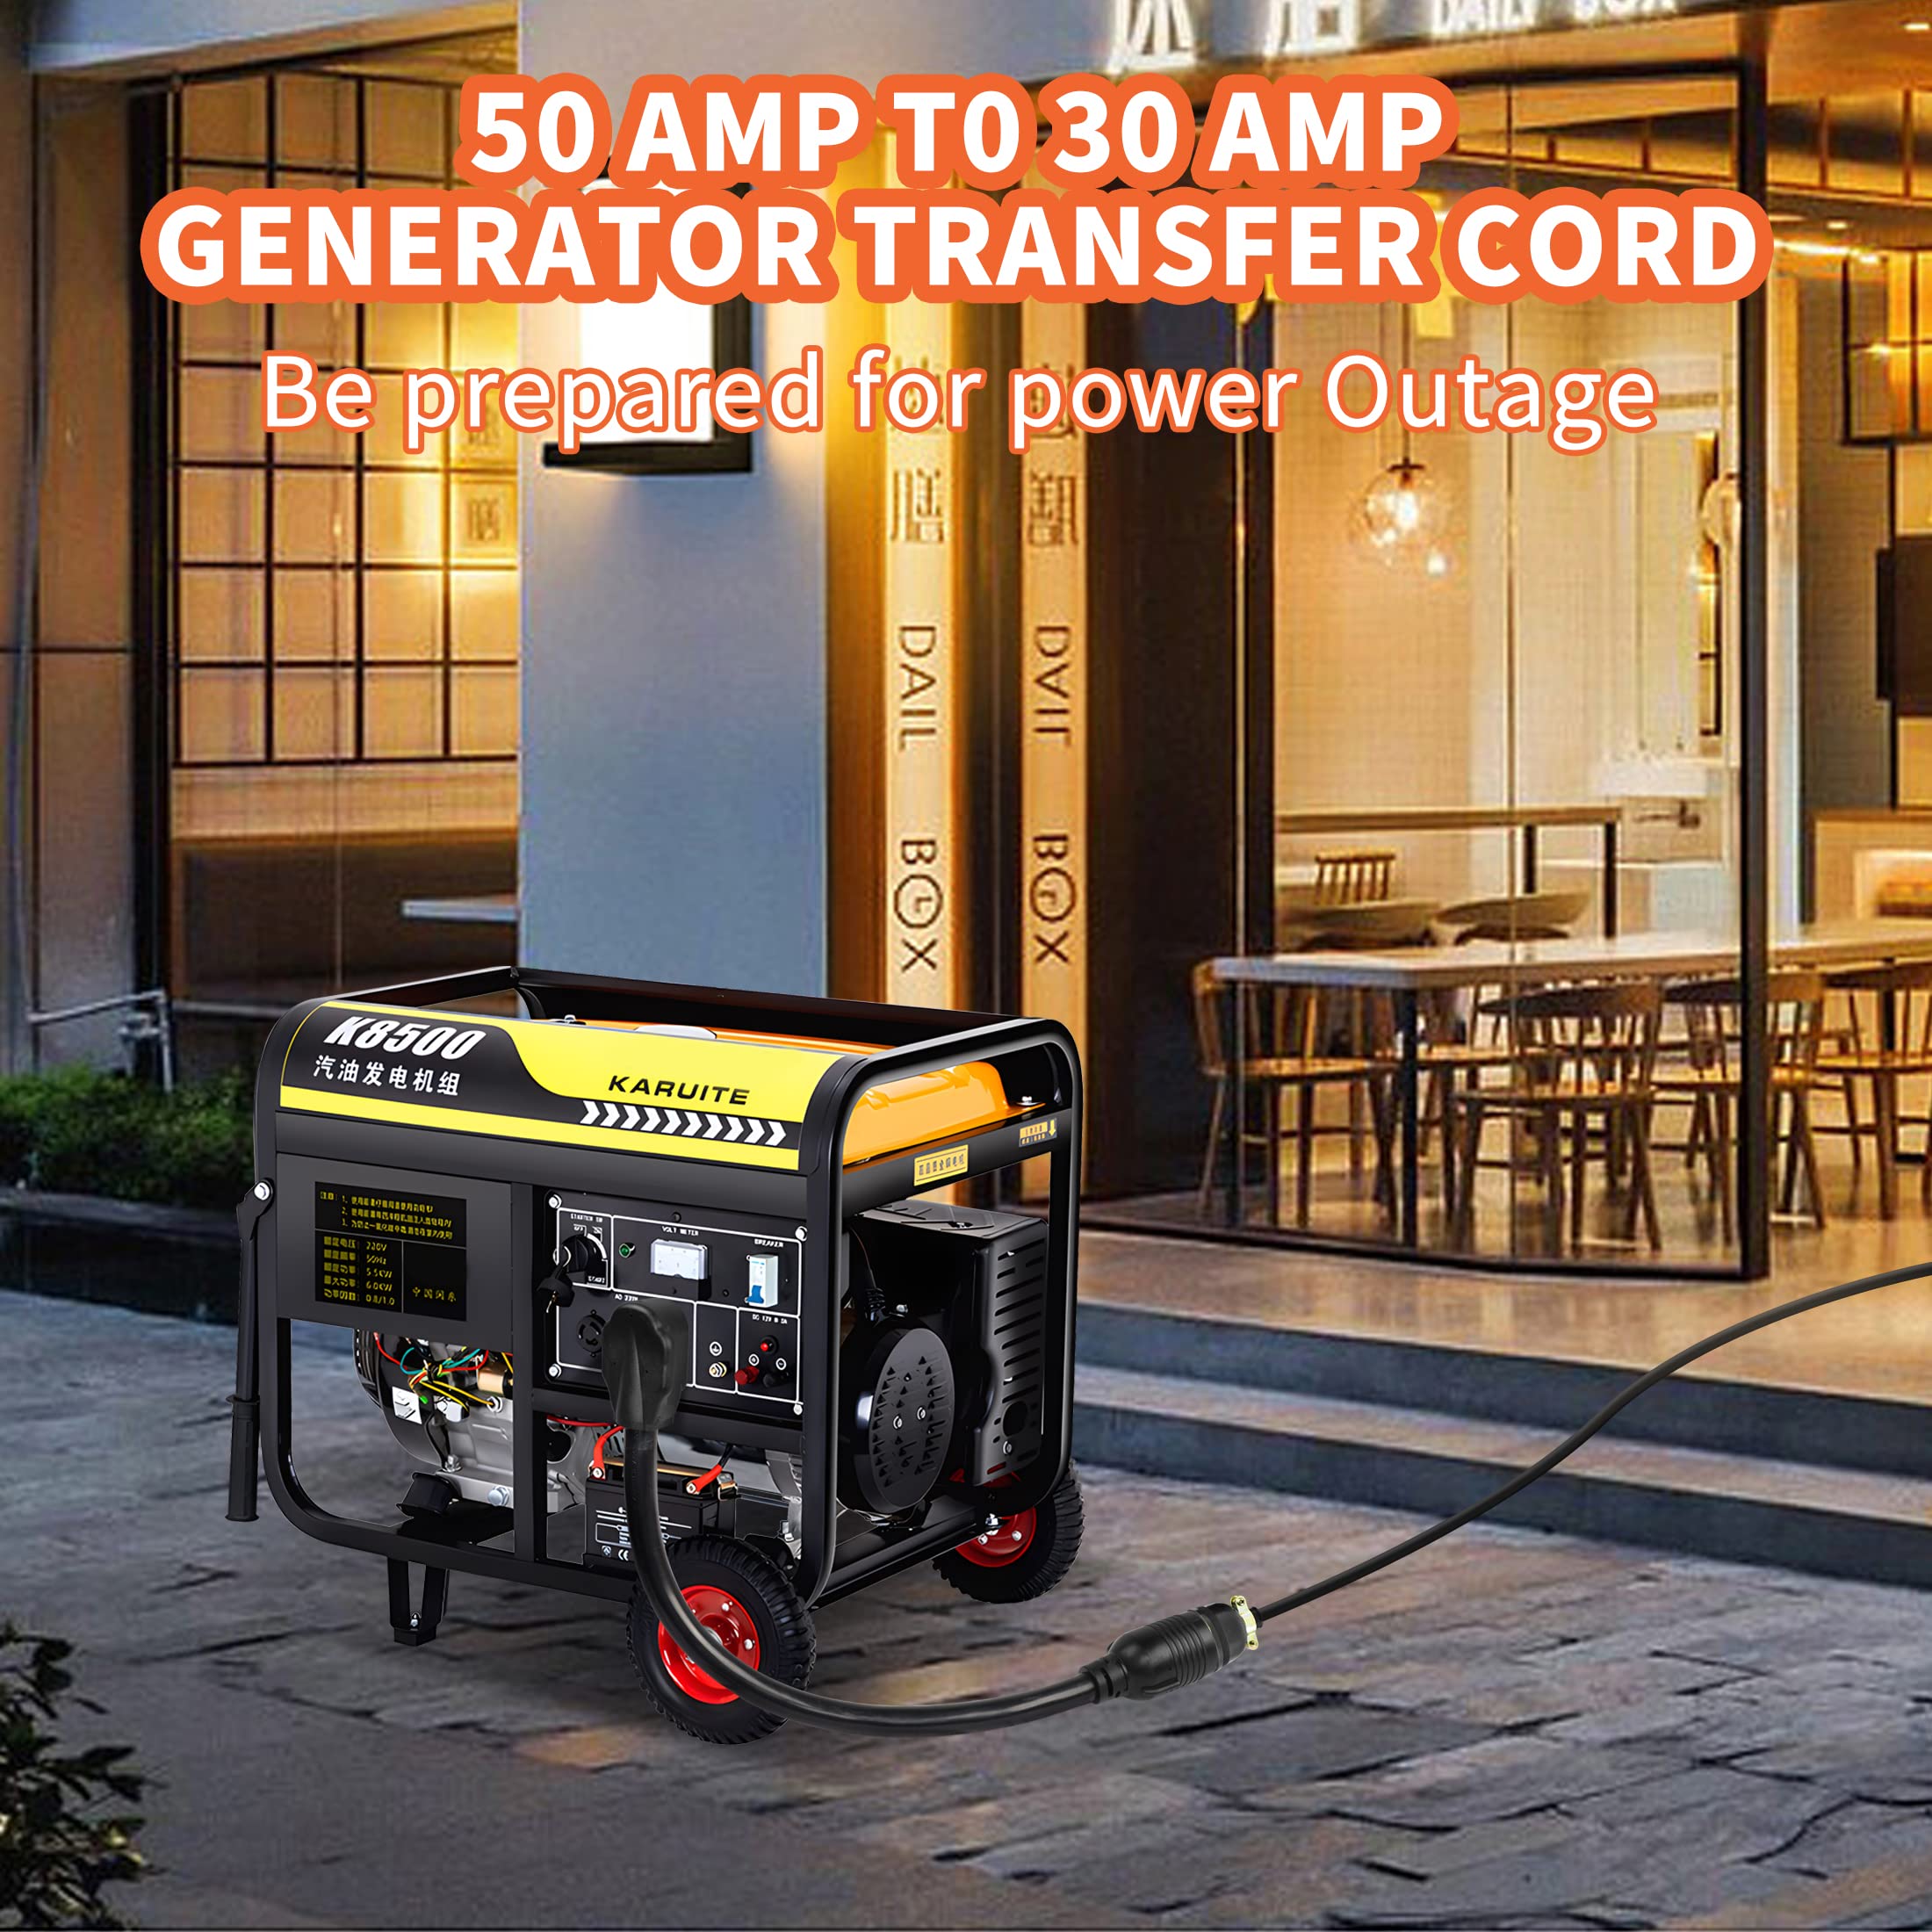 Generator Transfer Switch Adapter Cord YACSEJAO 50 Amp to 30 Amp 4-Prongs Locking Cord NEMA 14-50P to L14-30R STW 10 Gauge Heavy Duty Generator Power Cord